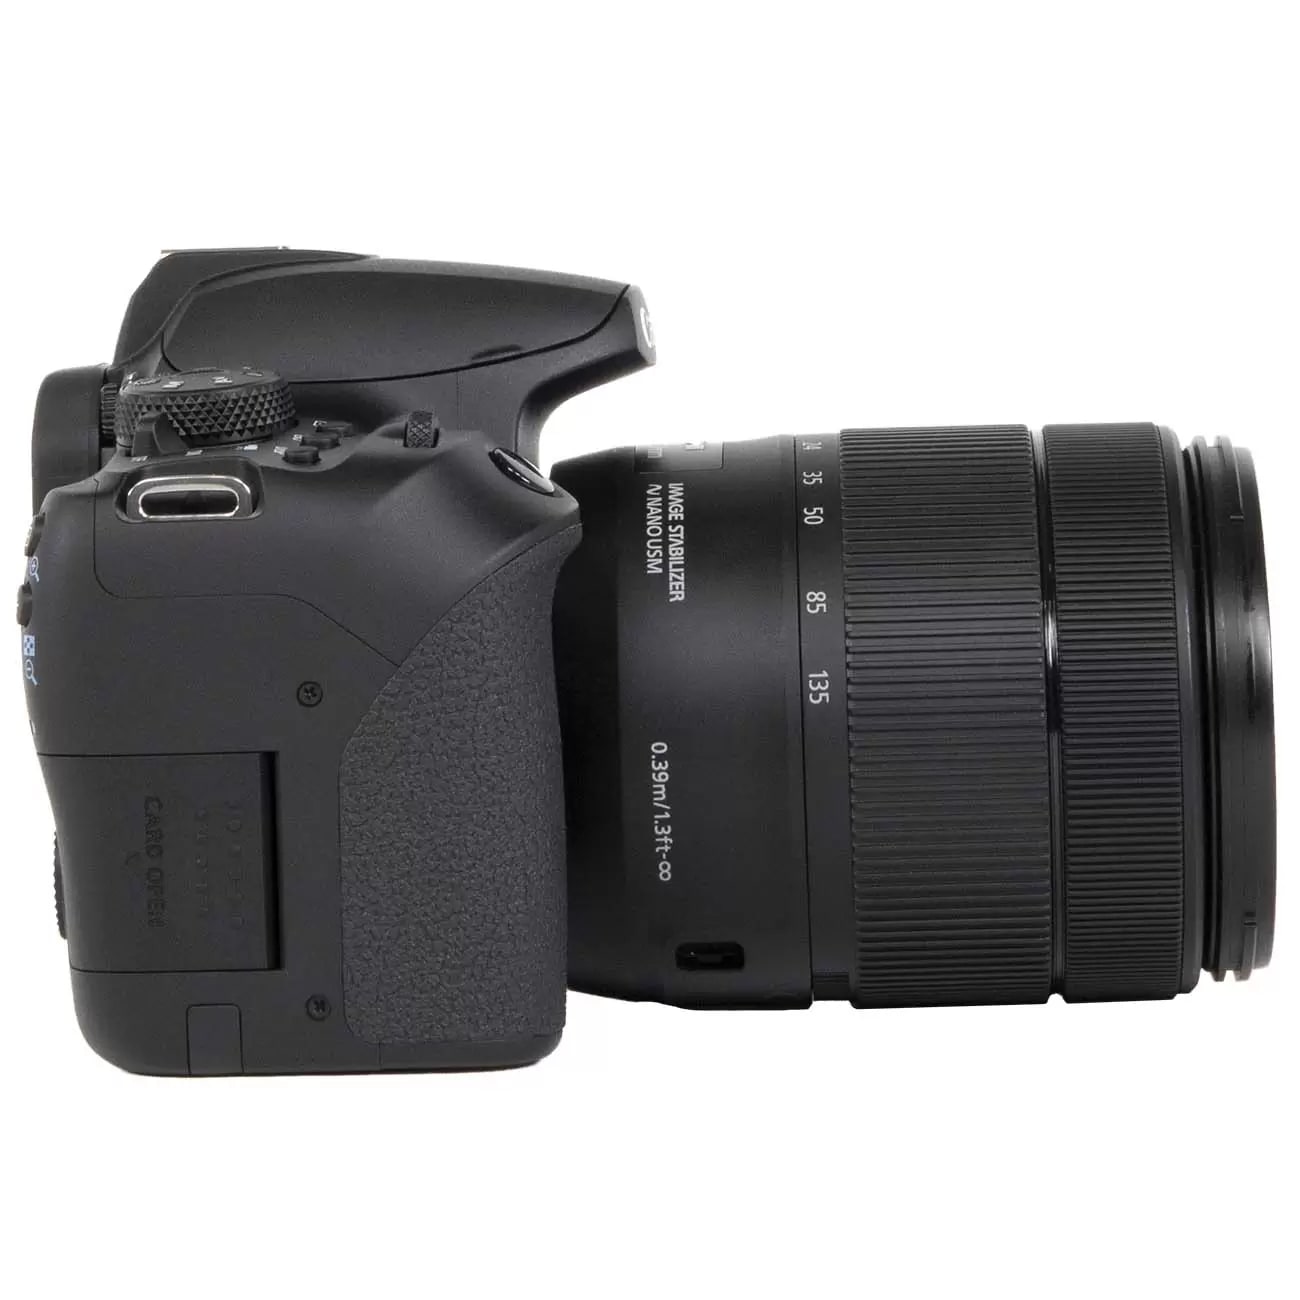 Canon EOS 850D Kit 18-135mm IS USM Меню На Английском Языке